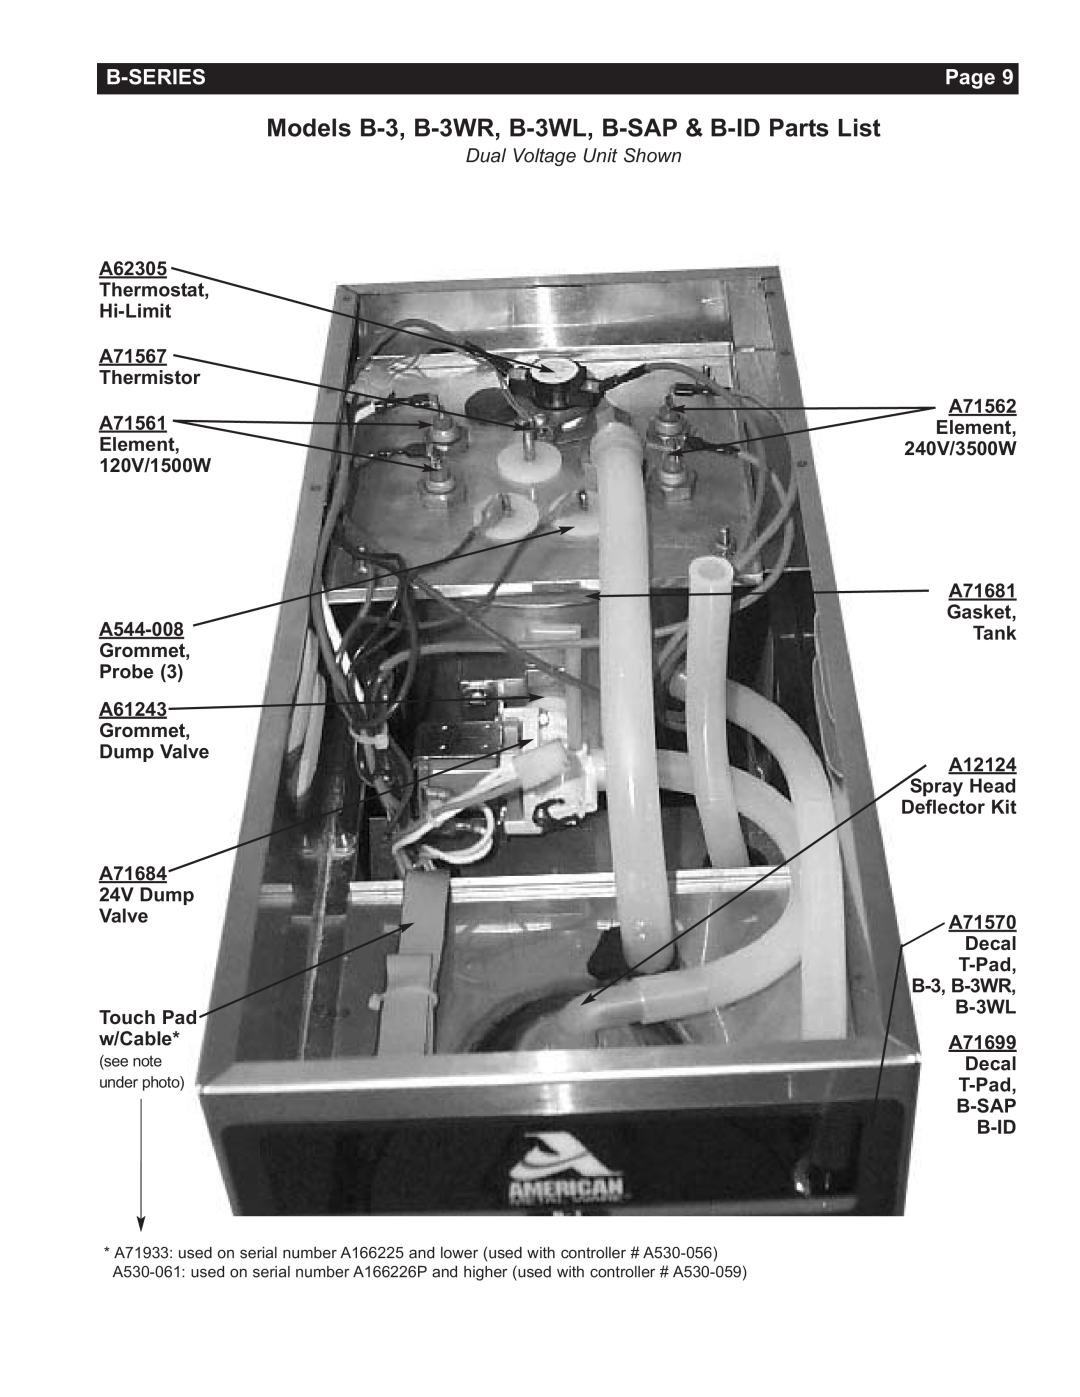 Grindmaster AMW B-Series manual Dual Voltage Unit Shown, Models B-3, B-3WR, B-3WL, B-SAP & B-ID Parts List, Page 